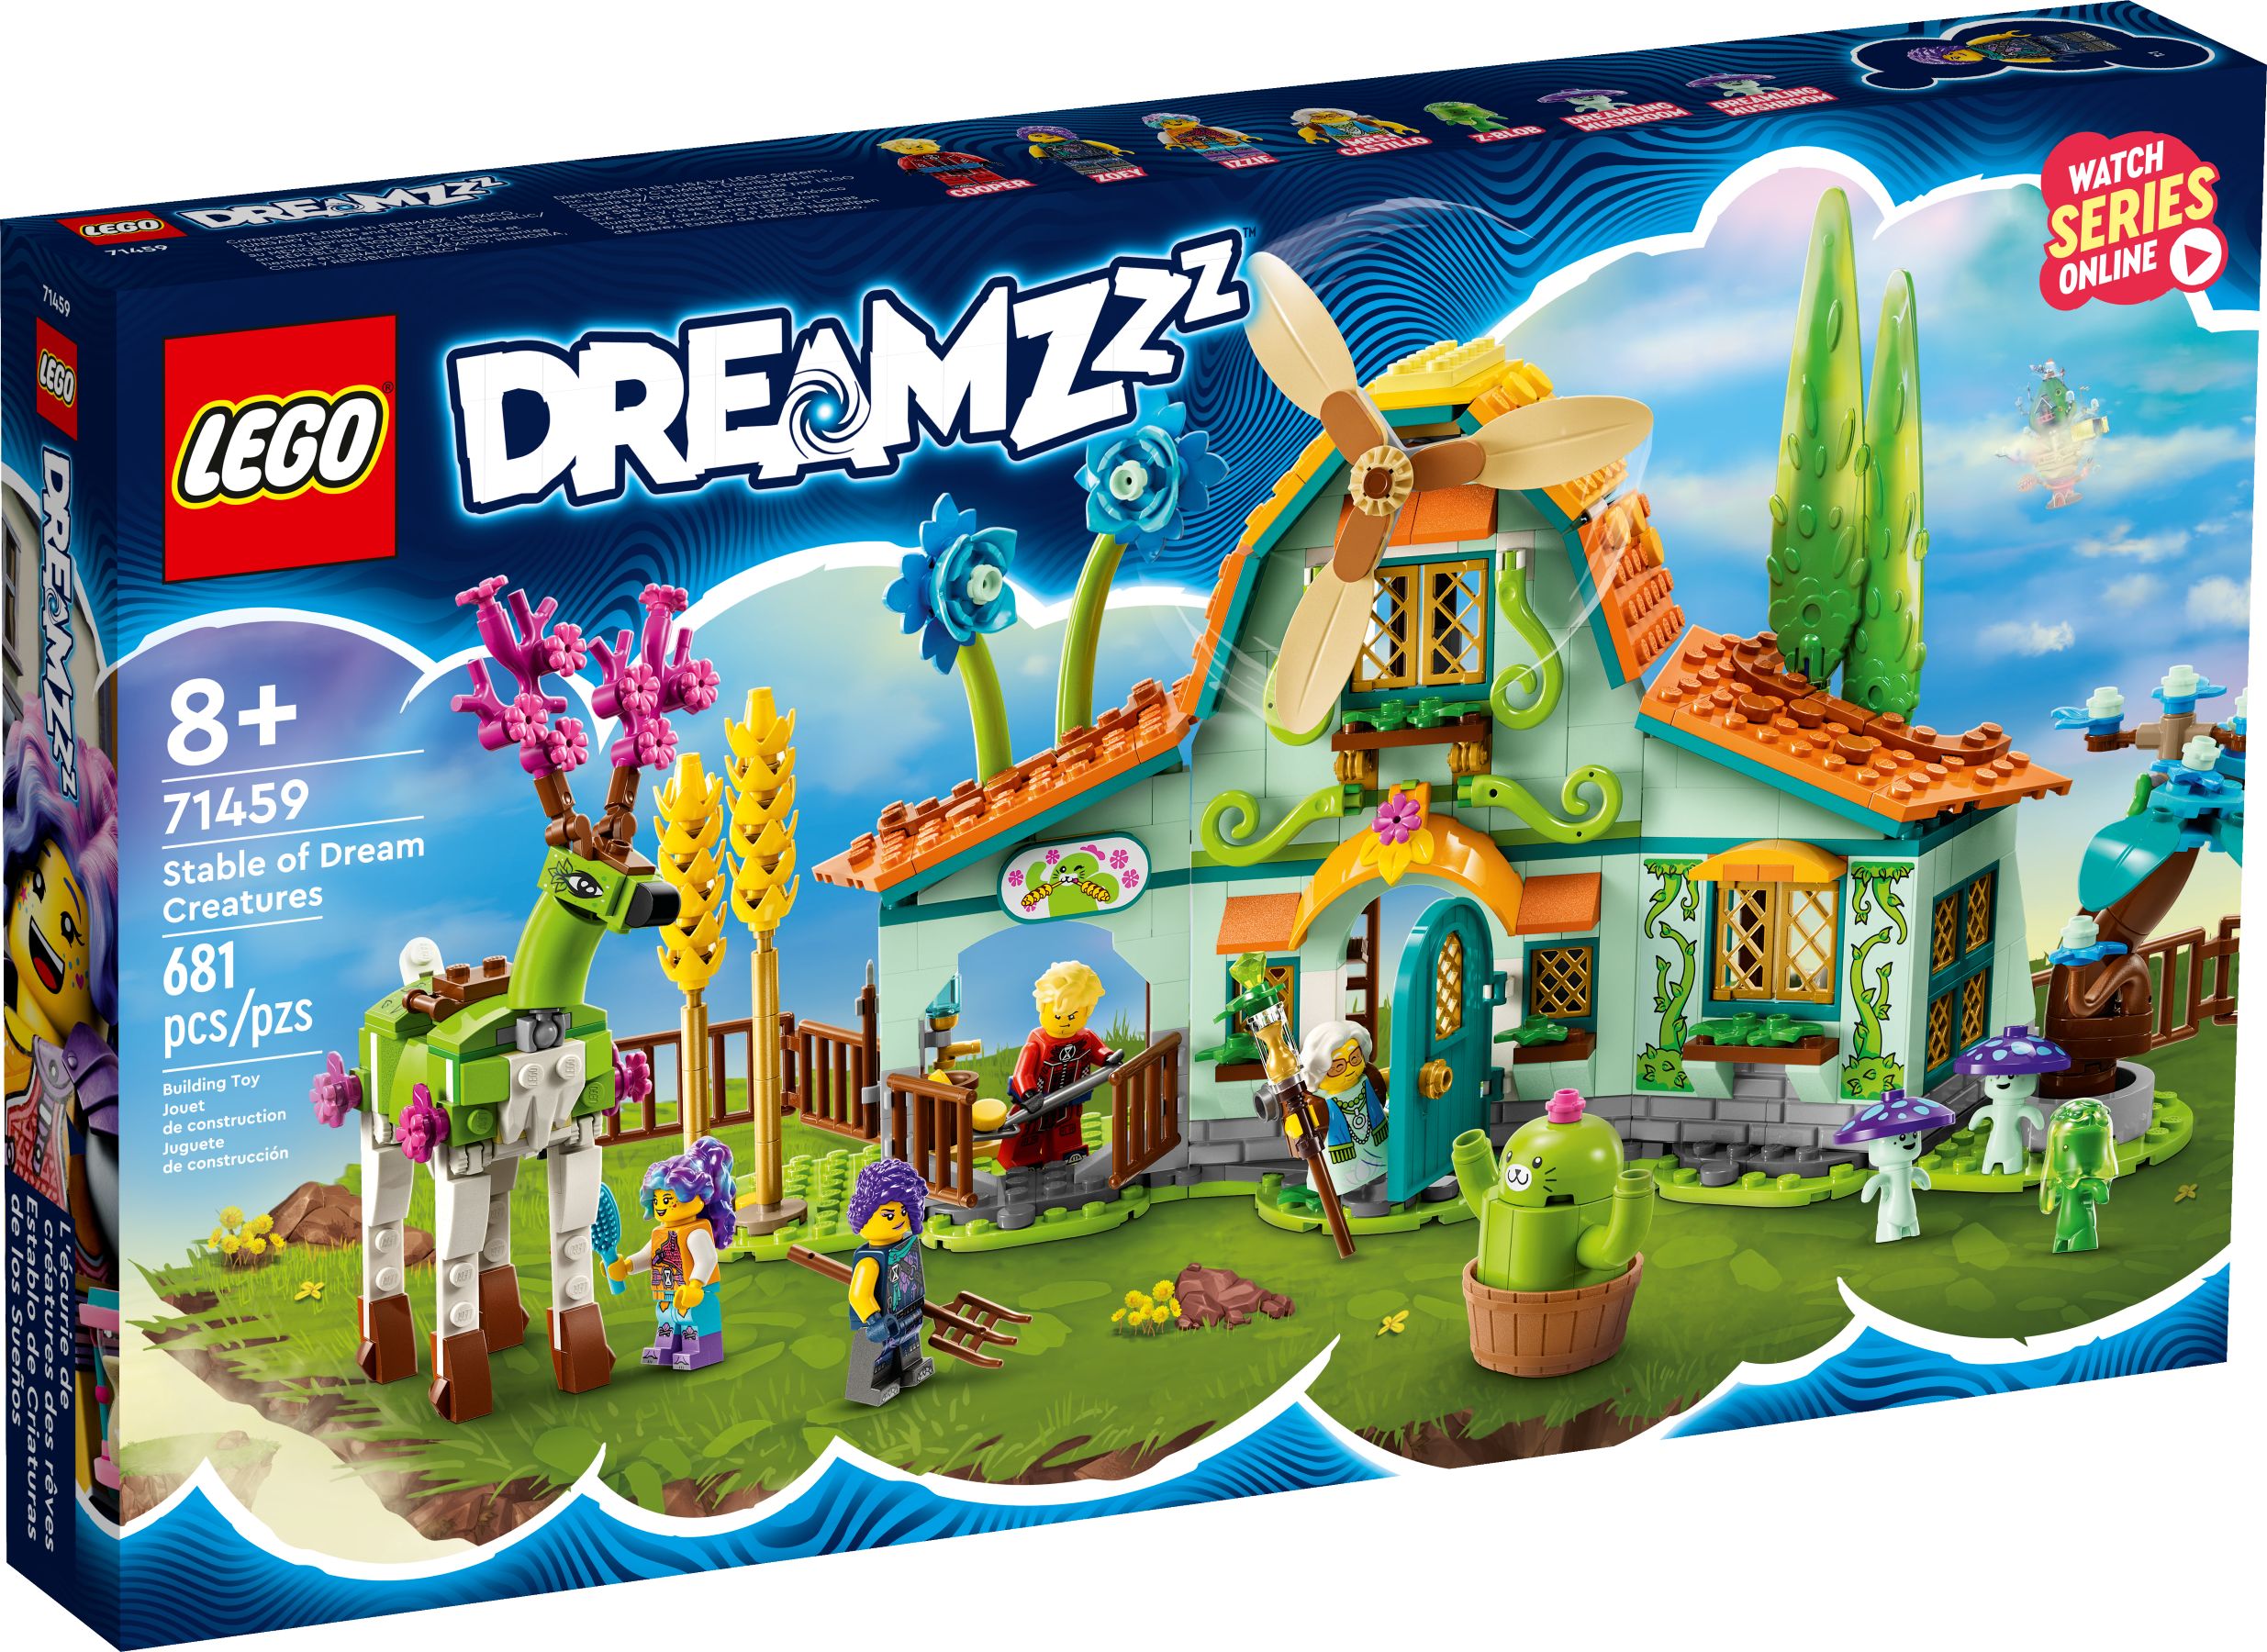 LEGO Dreamzzz 5008135 Fabelwesen Paket LEGO_71459_alt1.jpg